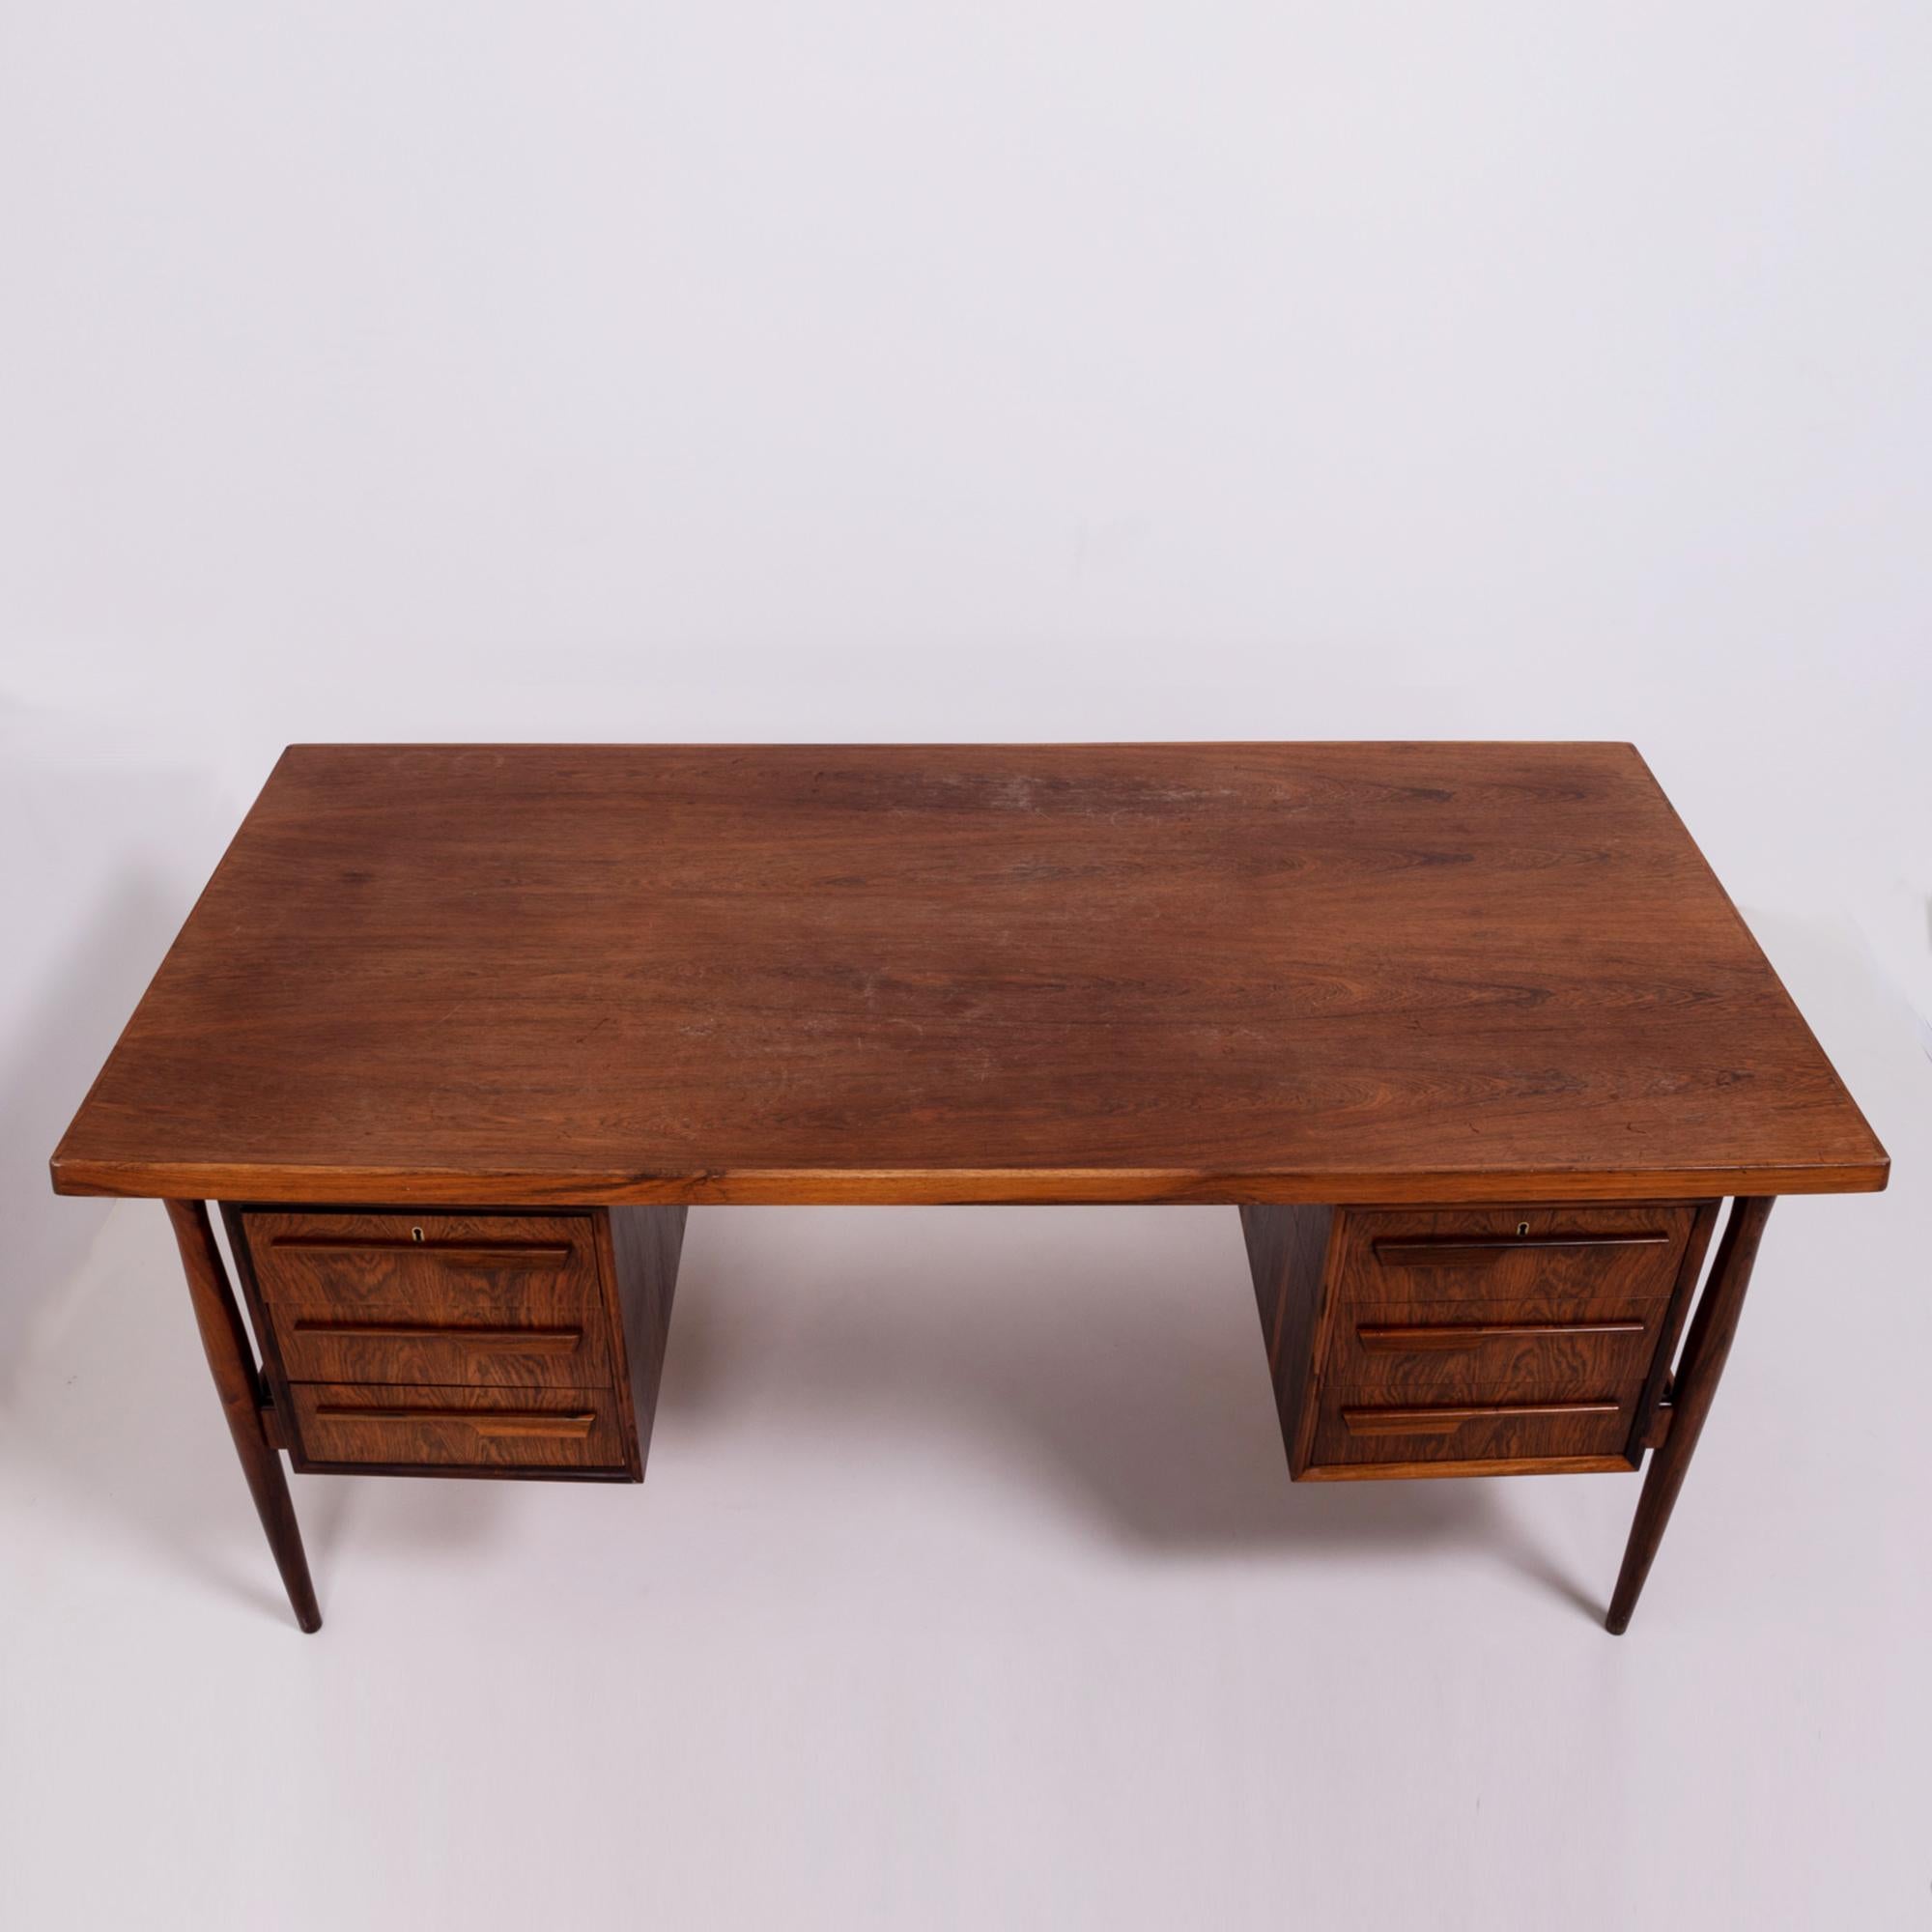 Midcentury Modern Brown Rosewood Desk, 20th Century, c 1960s, lockable drawers 2